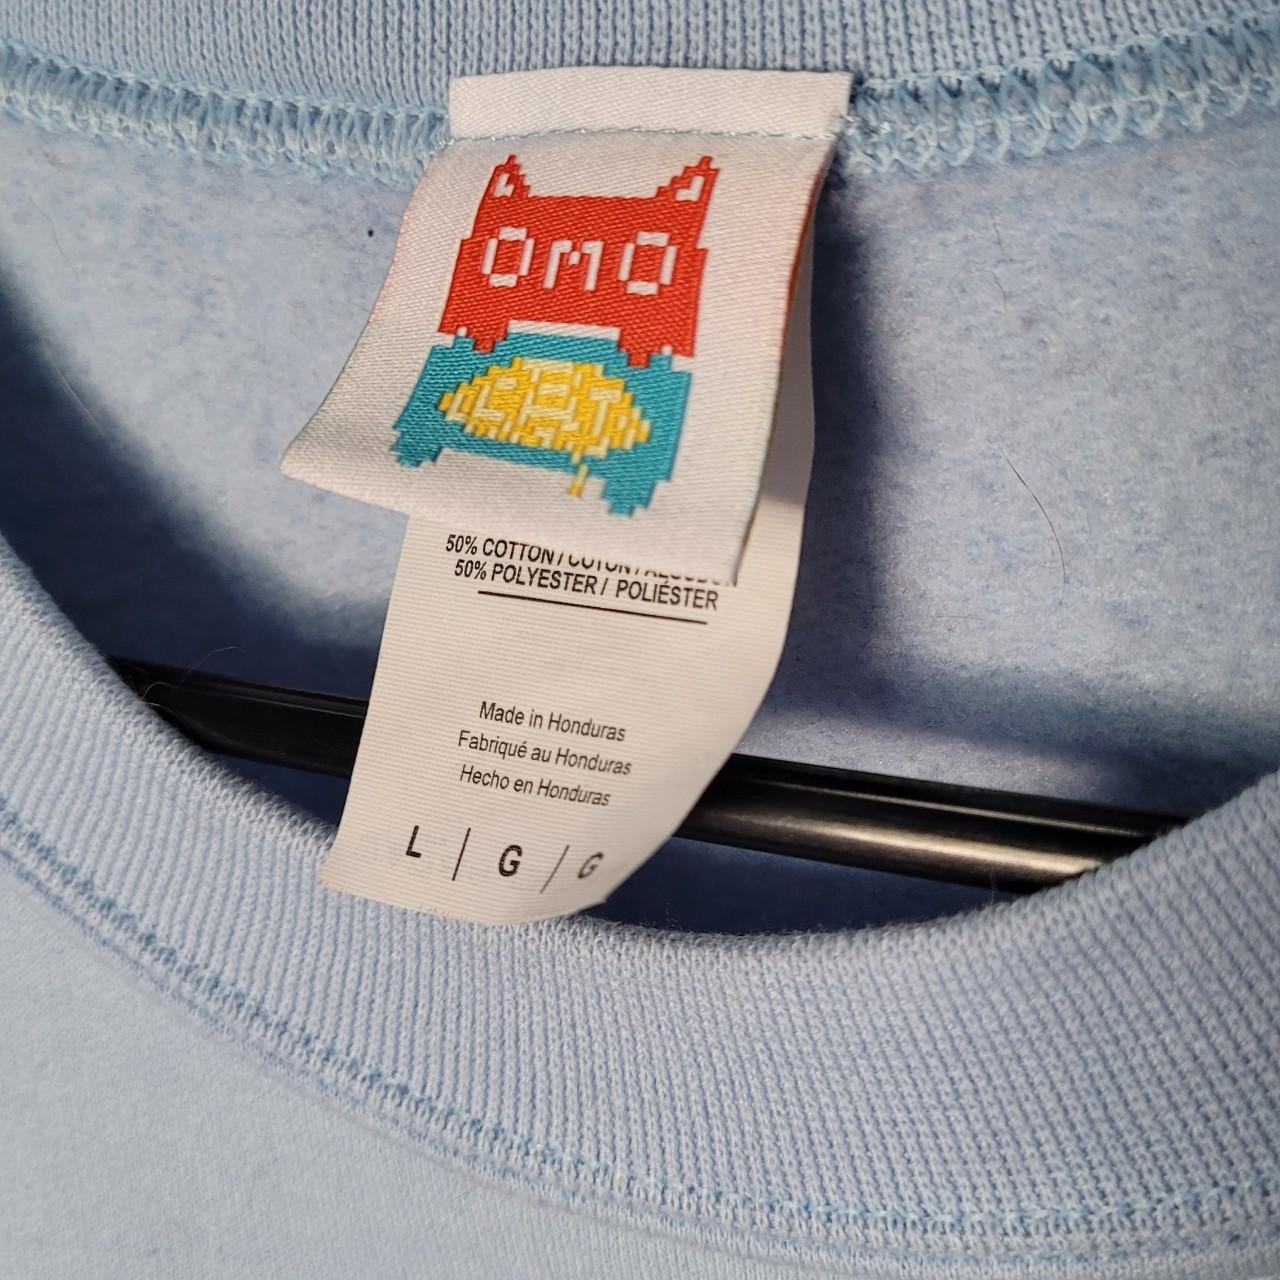 Product Image 2 - Rare OMOCAT Toastgirl sweatshirt. Very